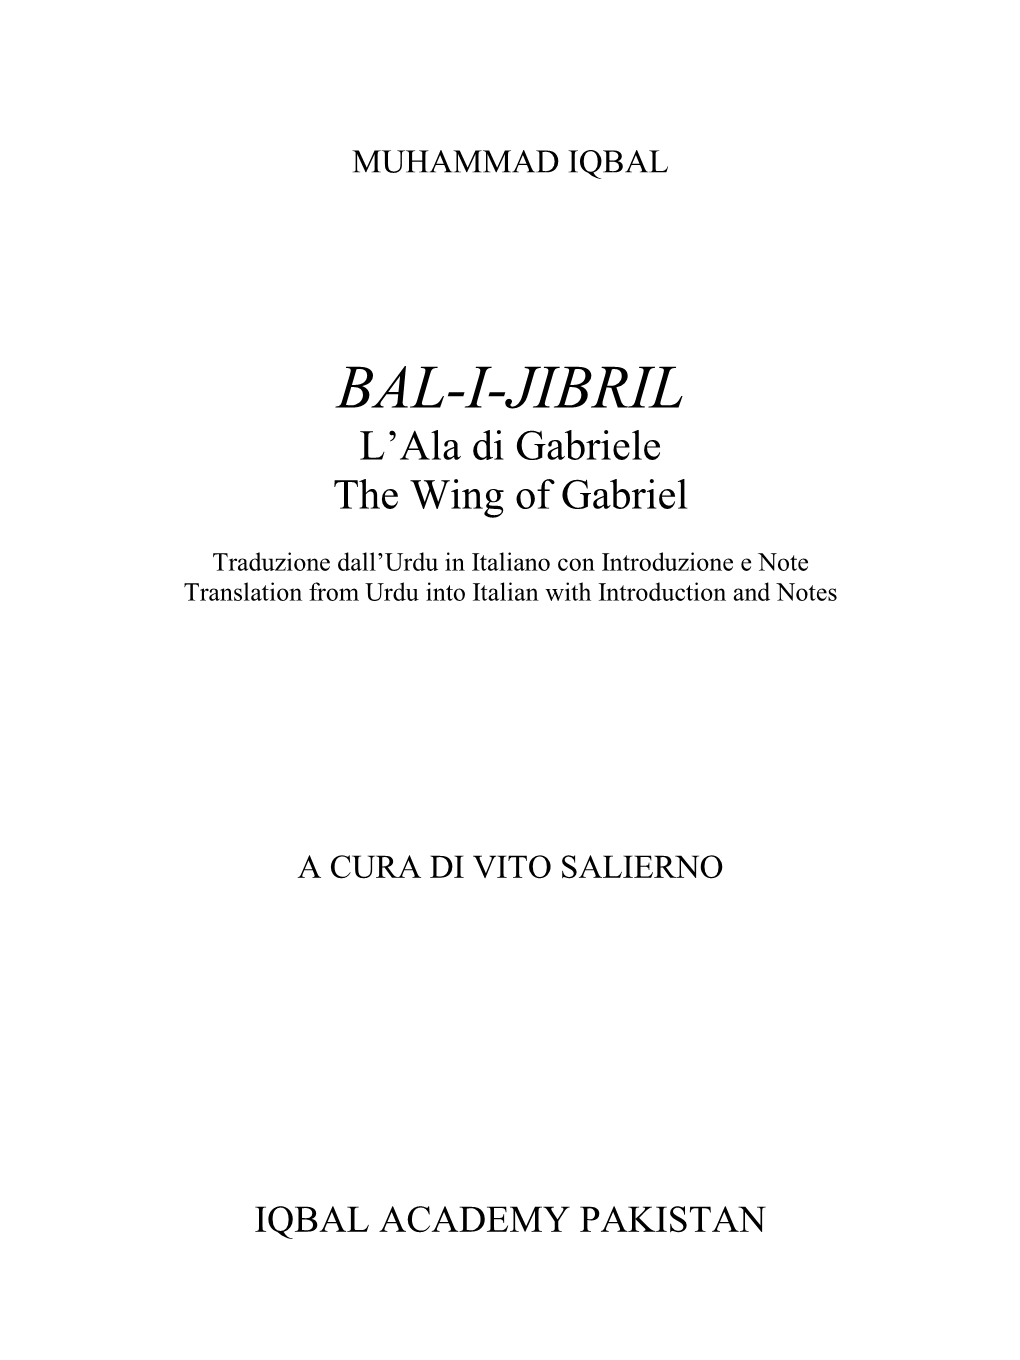 BAL-I-JIBRIL L’Ala Di Gabriele the Wing of Gabriel